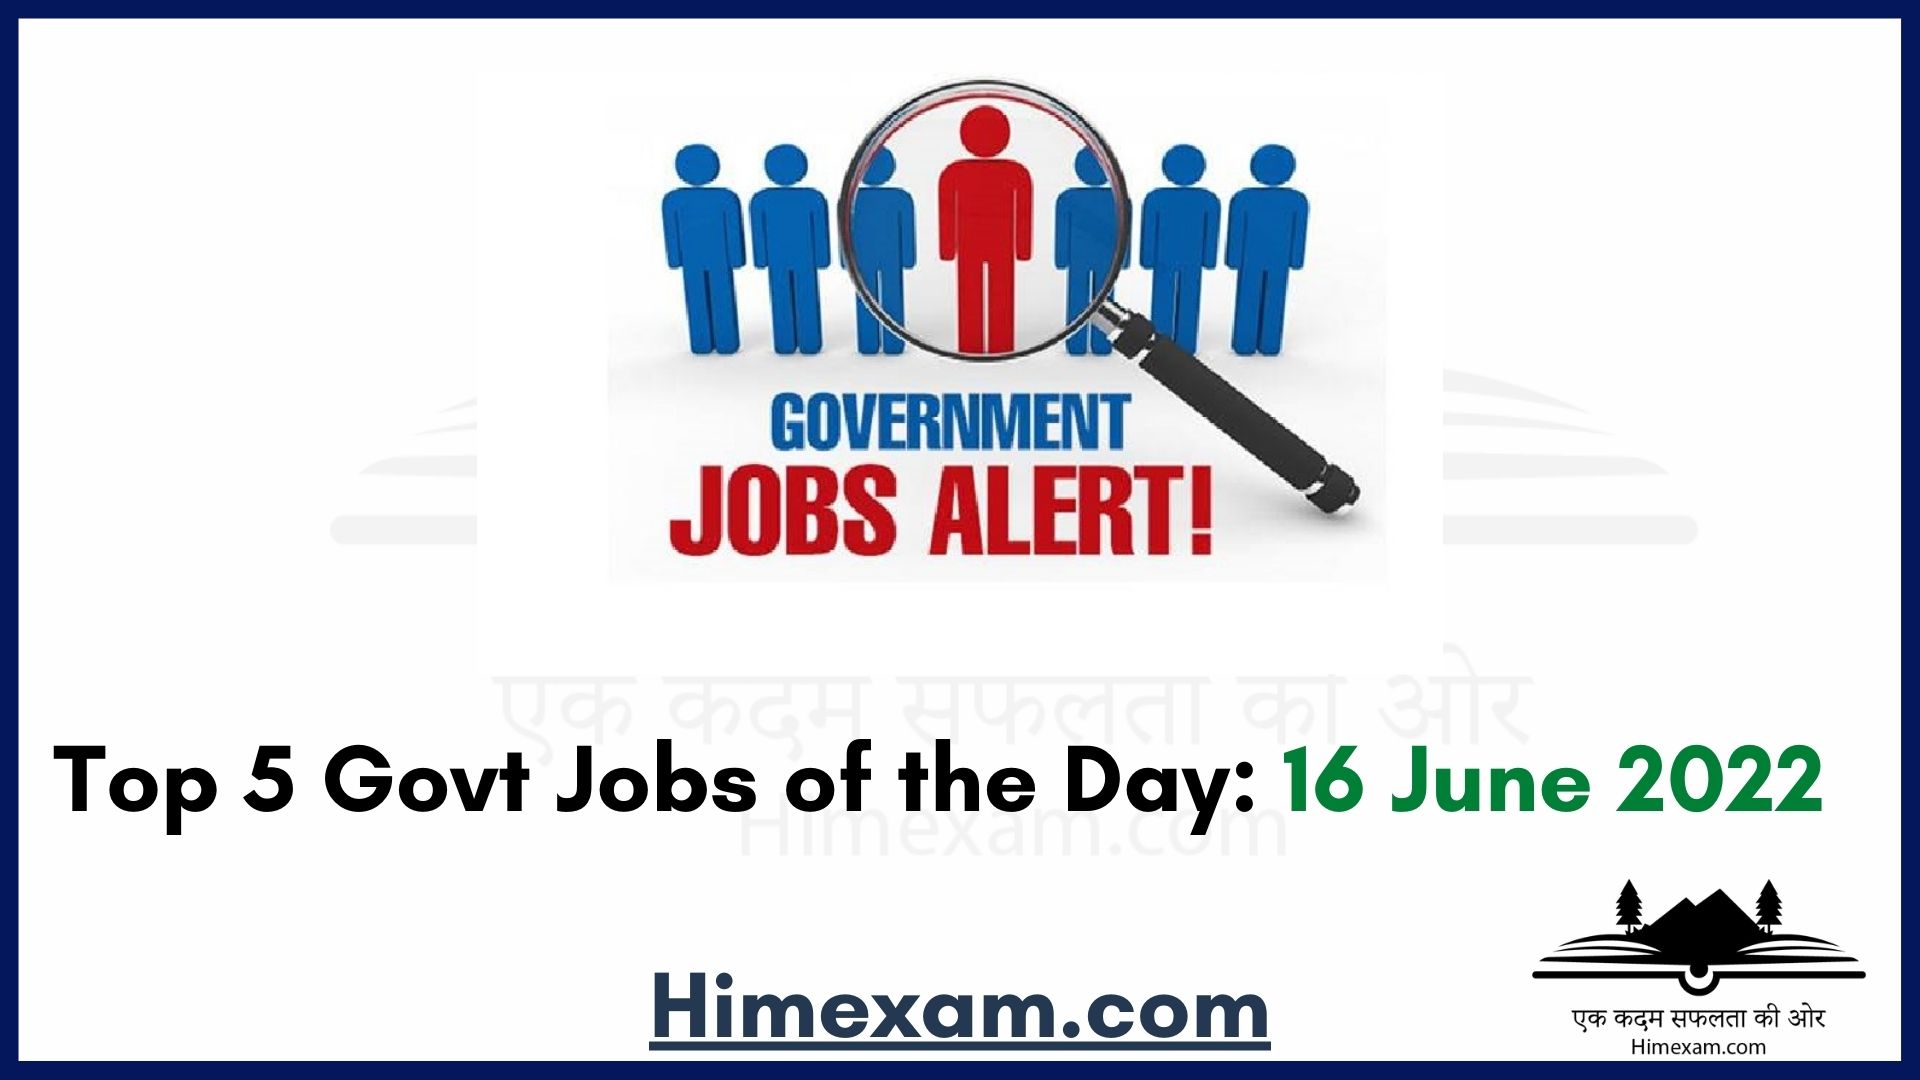 Top 5 Govt Jobs of the Day: 16 June 2022